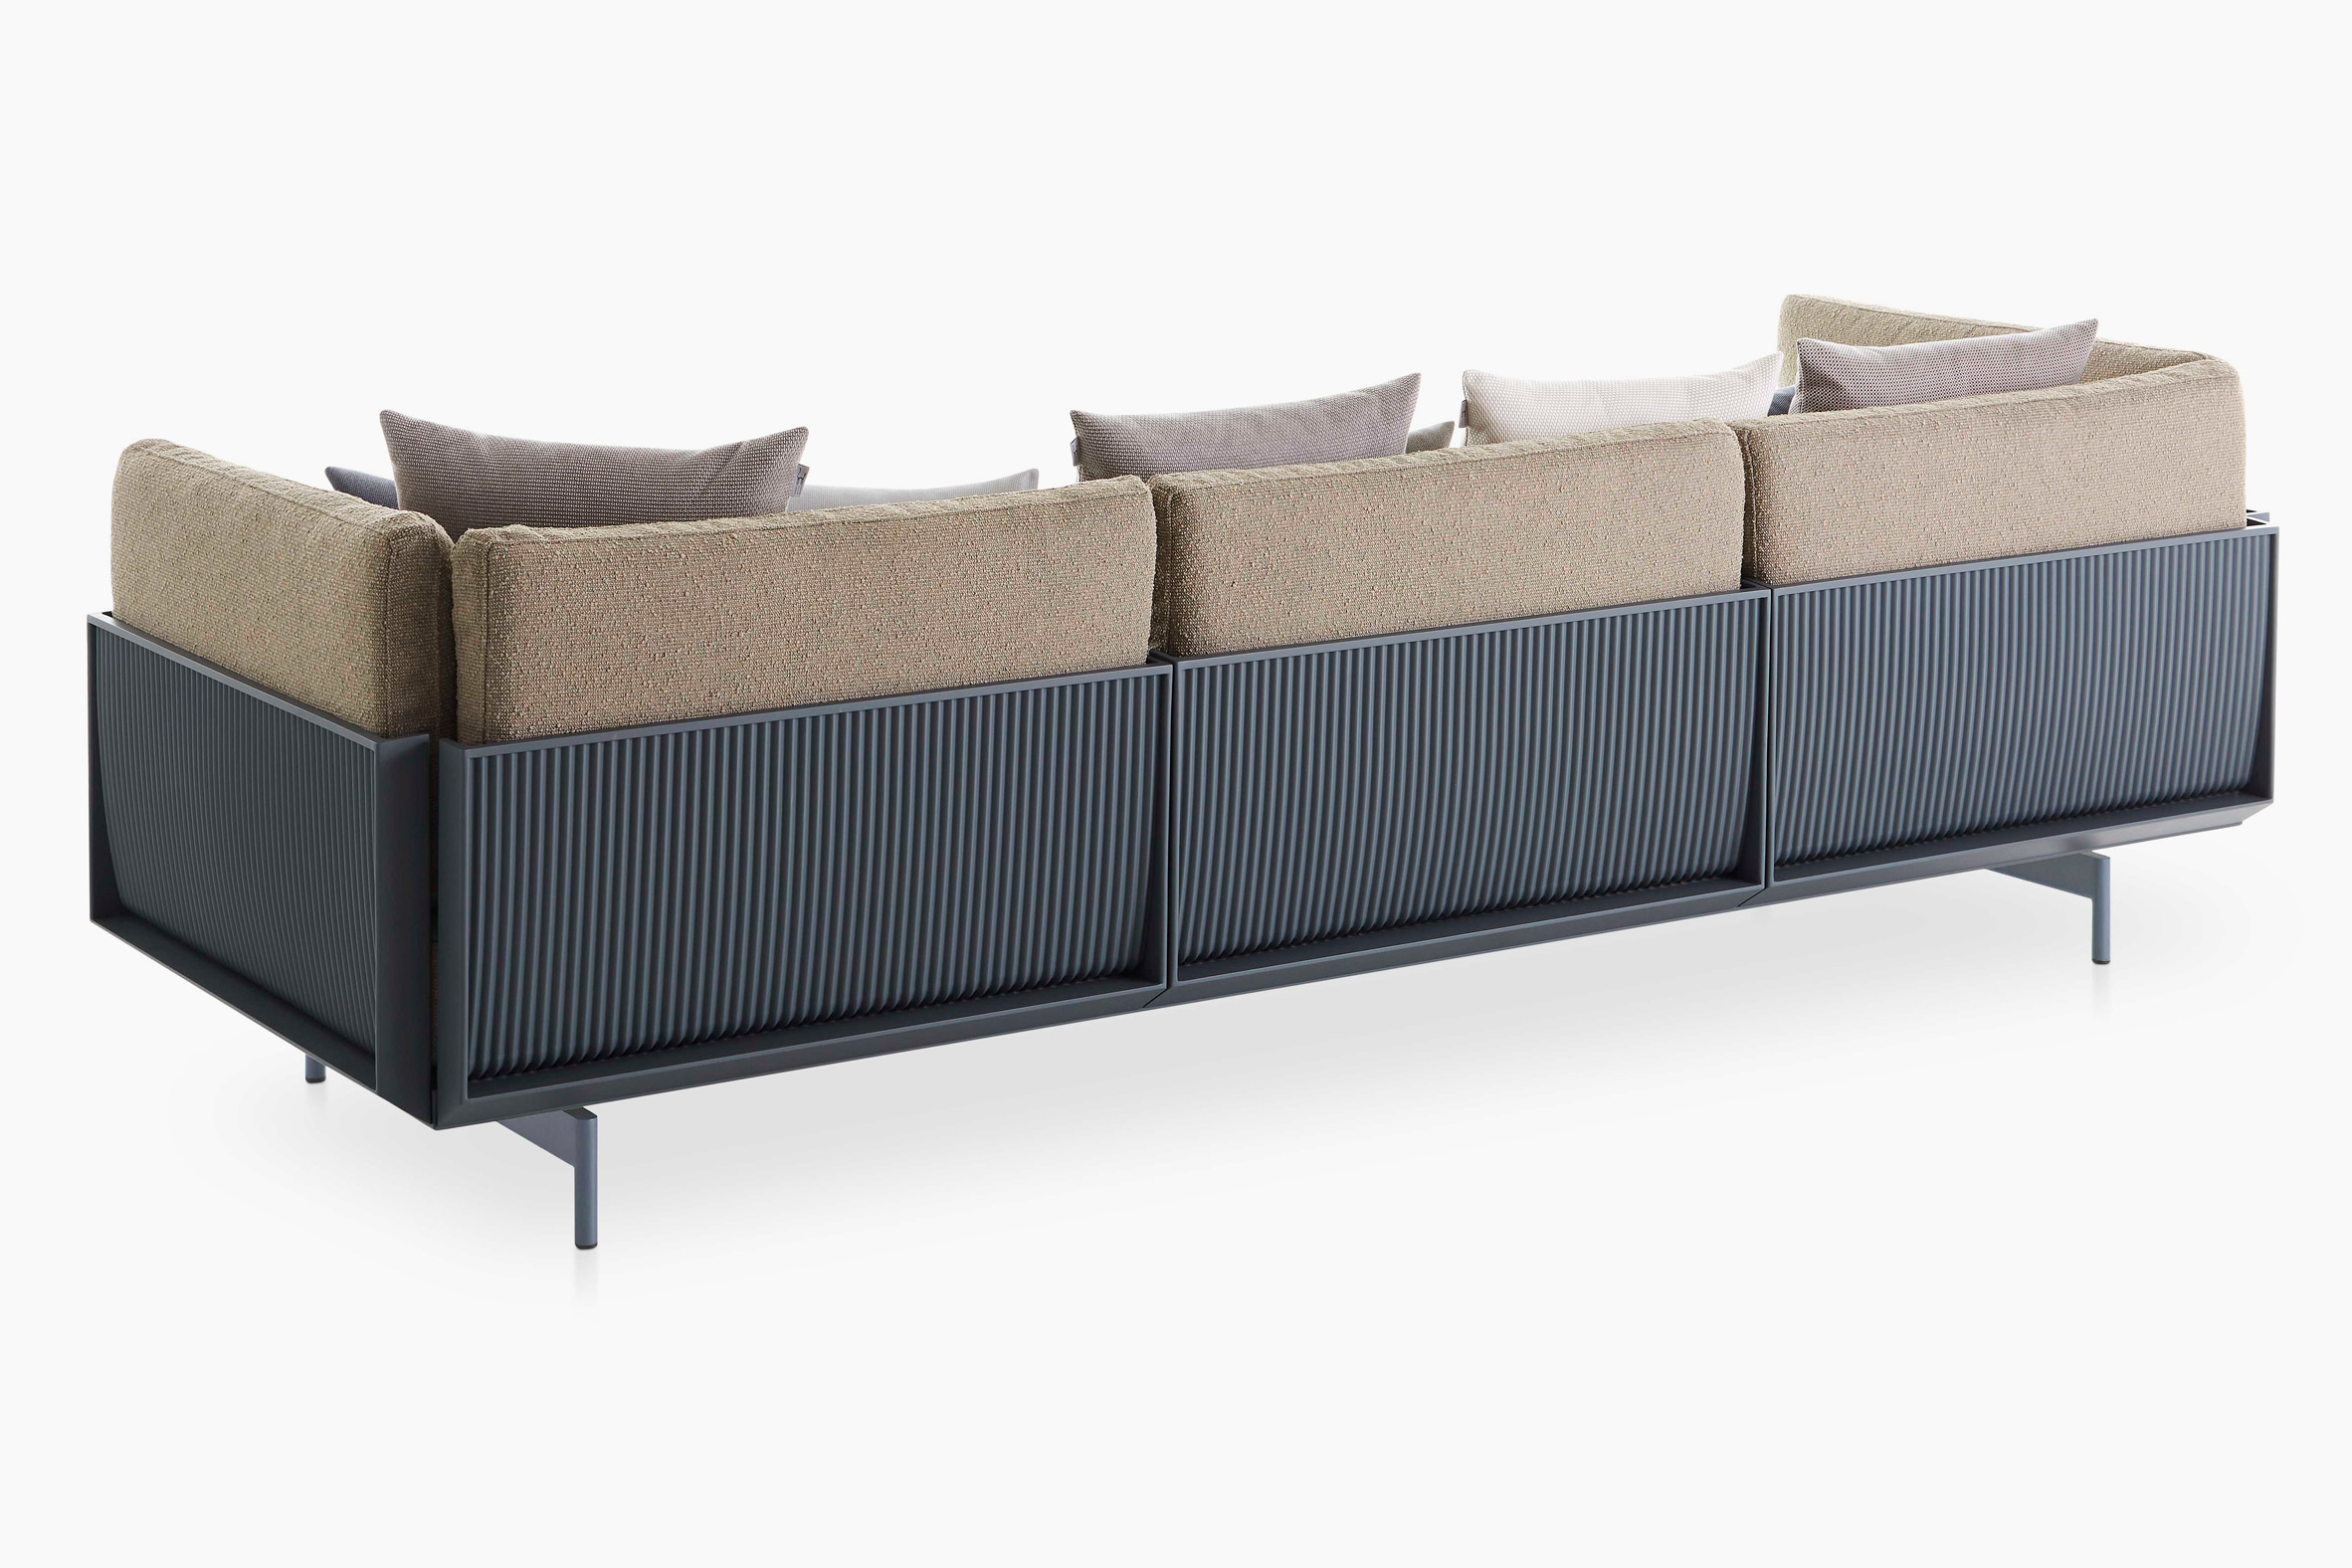 The corrugated metal back of a sofa by Luca Nichetto for Gandia Blasco